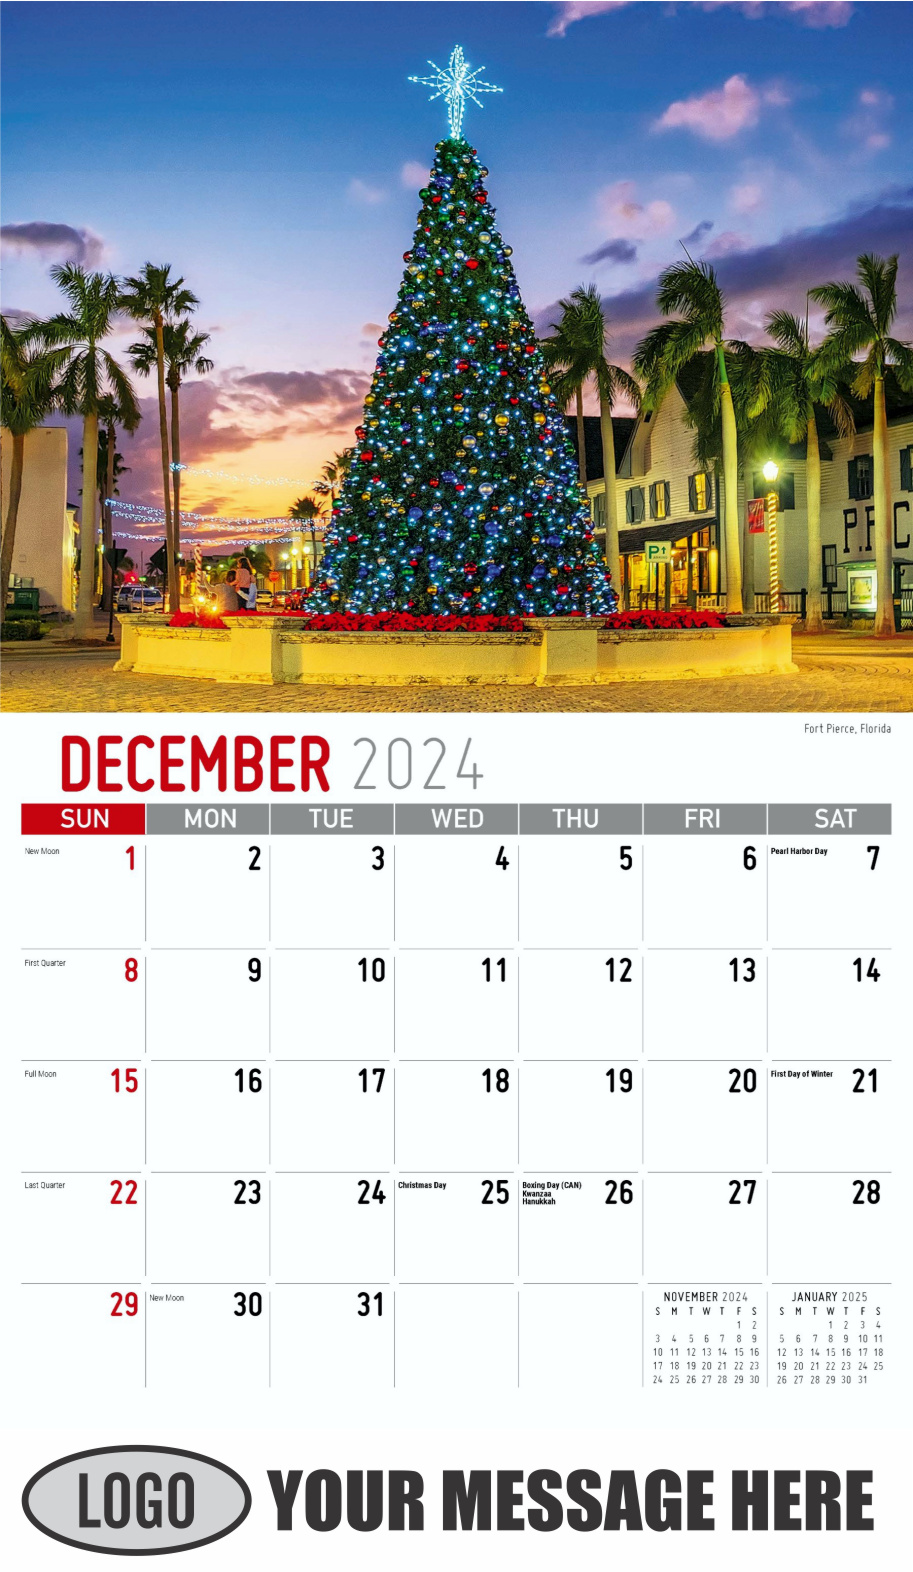 Scenes of Southeast USA 2024 Business Promo Wall Calendar - December